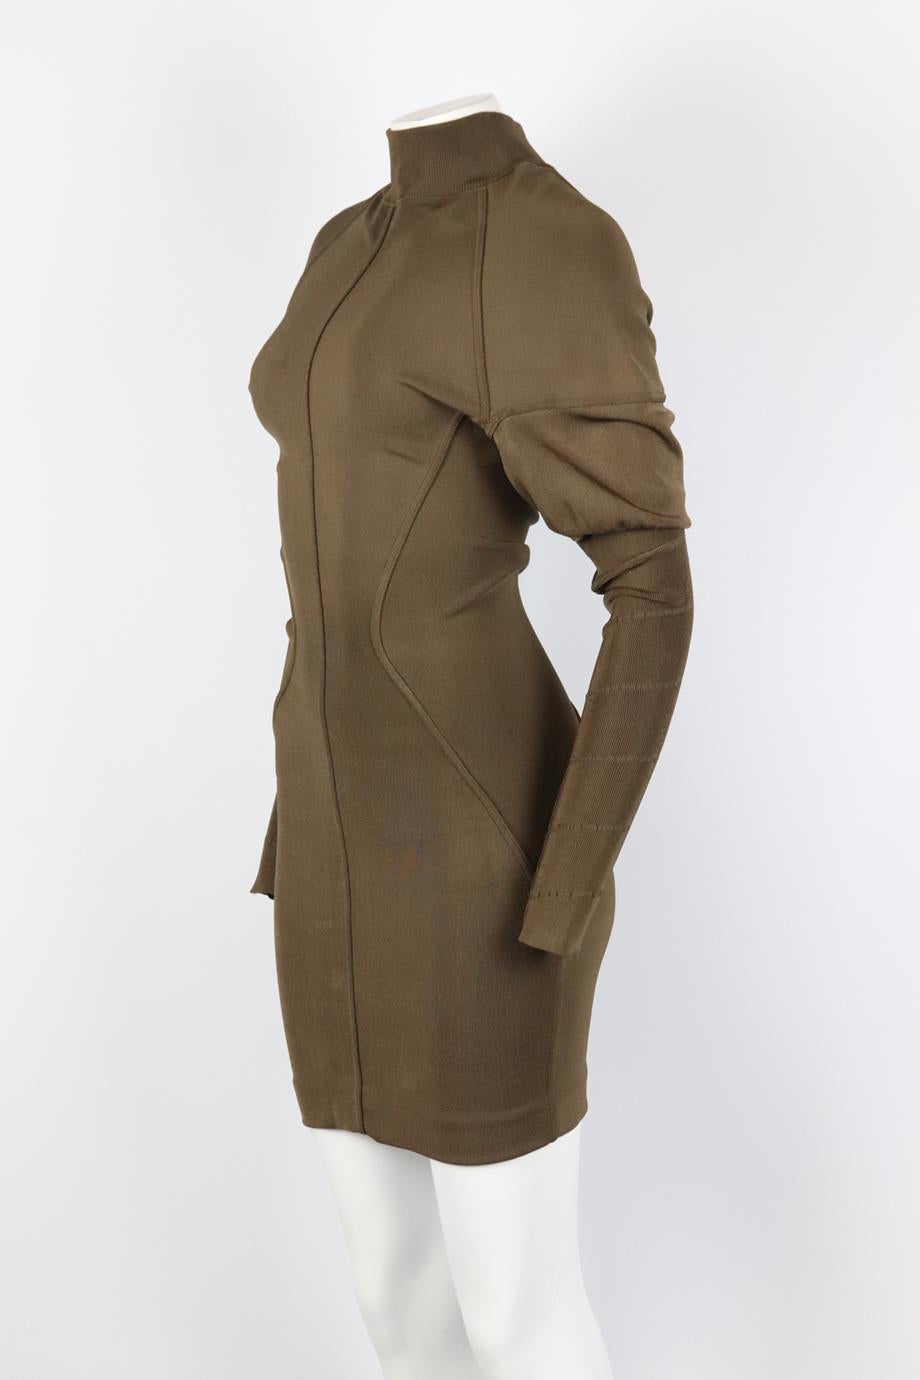 Azzedine Alaïa Vintage Stretch Knit Turtleneck Mini Dress Xsmall In Fair Condition In London, GB